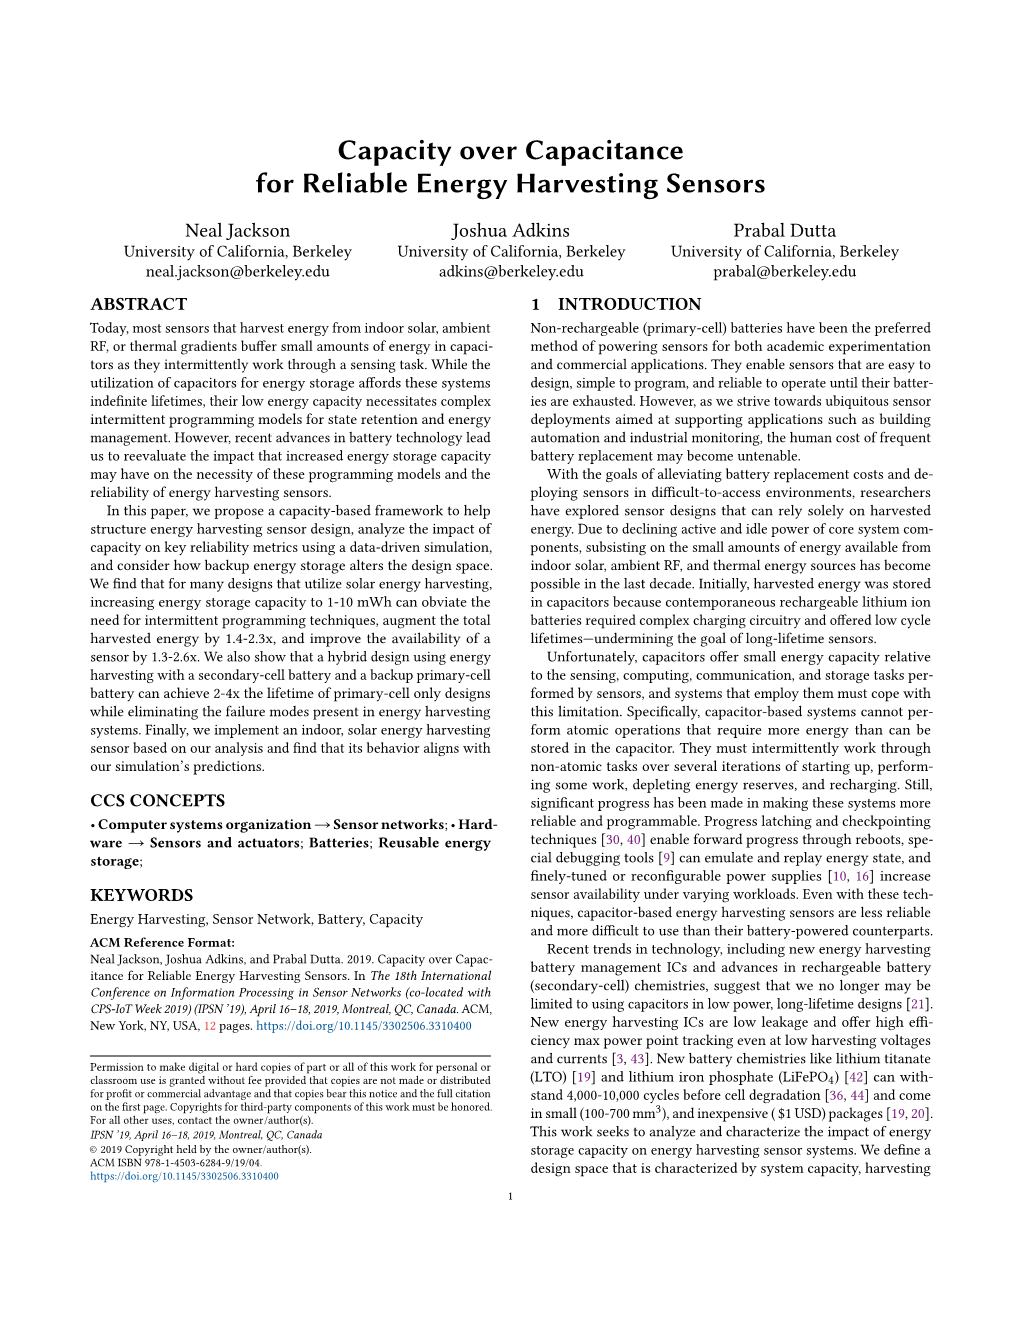 Capacity Over Capacitancefor Reliable Energy Harvesting Sensors